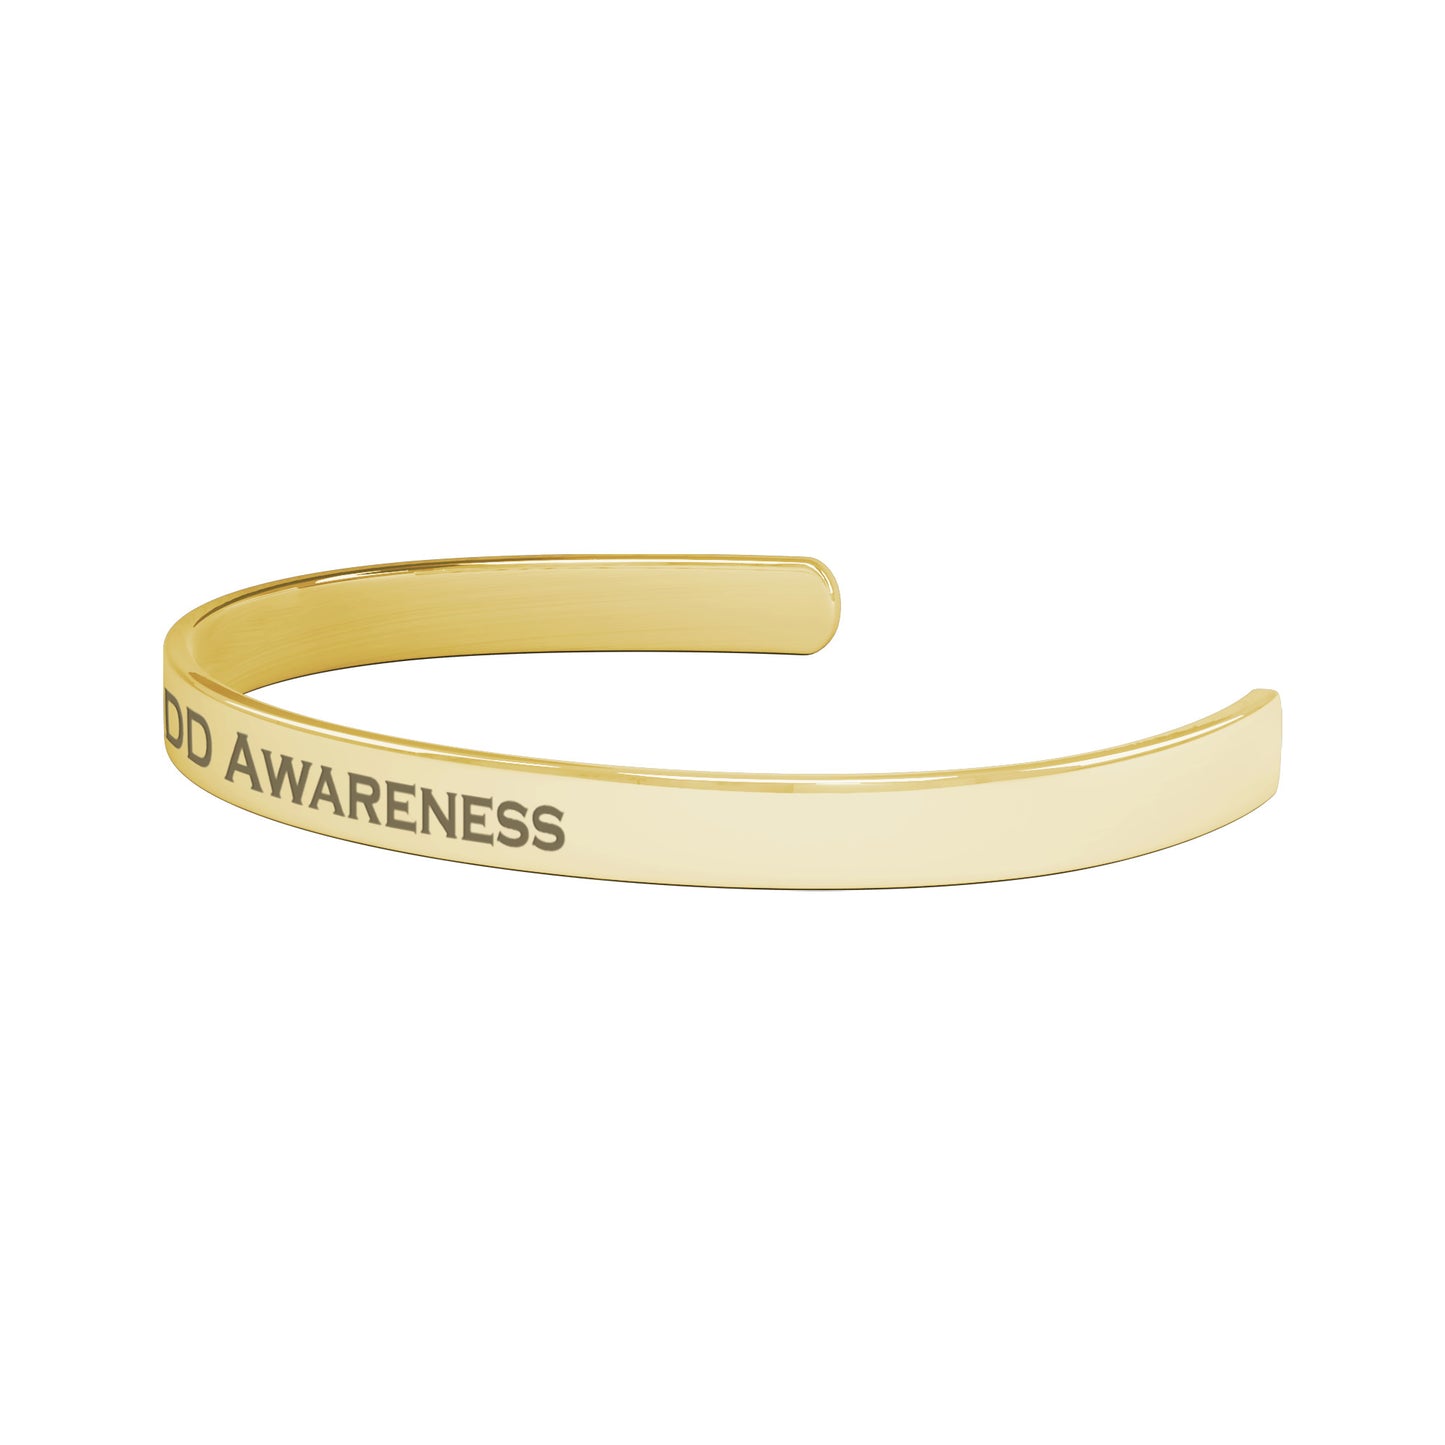 Personalized ADD Awareness Cuff Bracelet